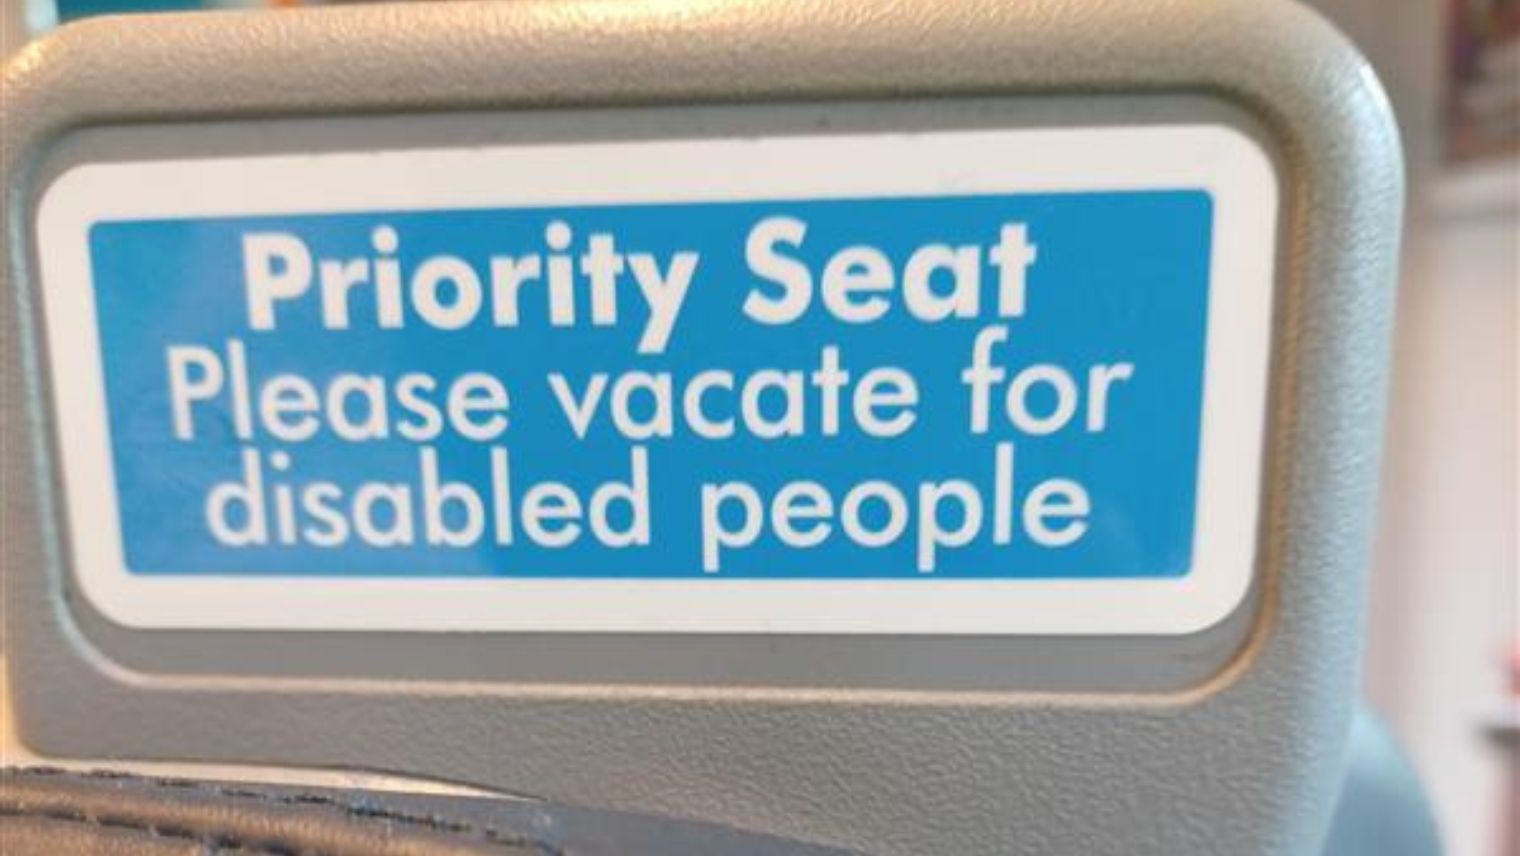 priority seat